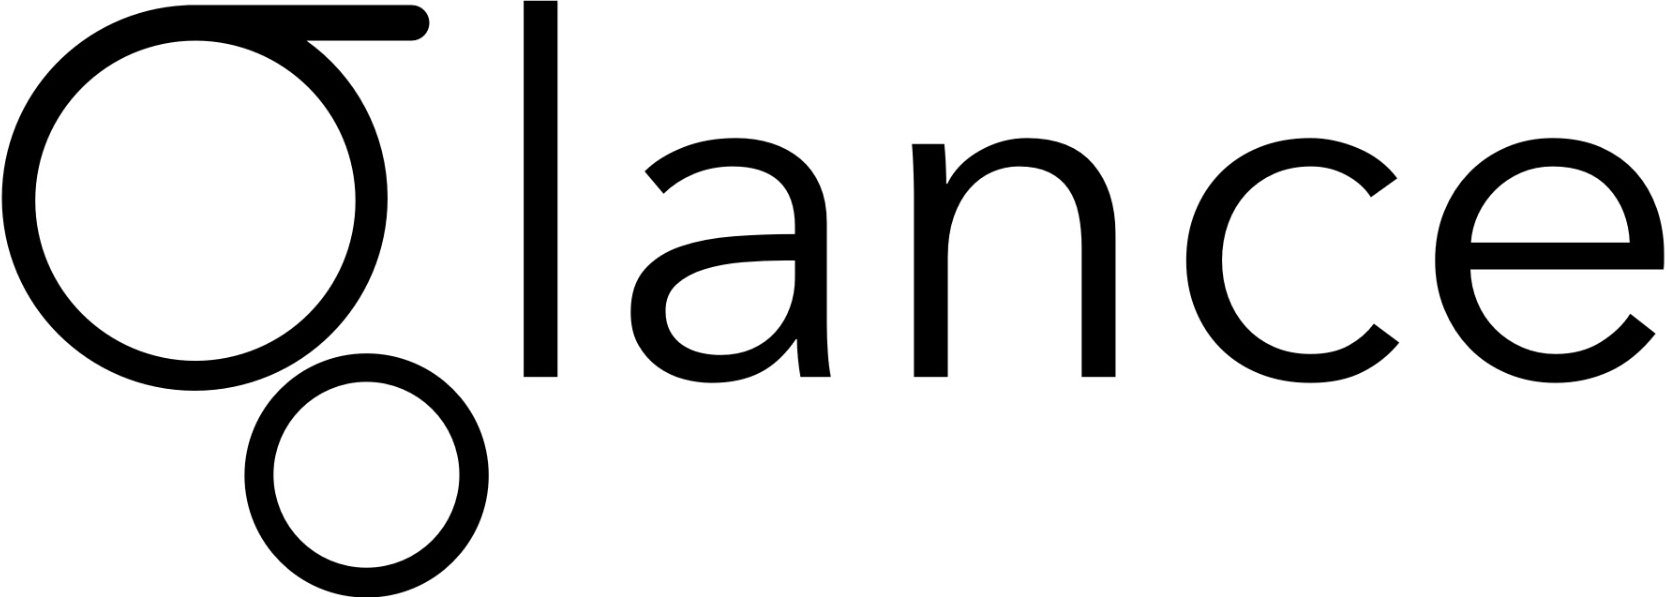 Trademark Logo GLANCE